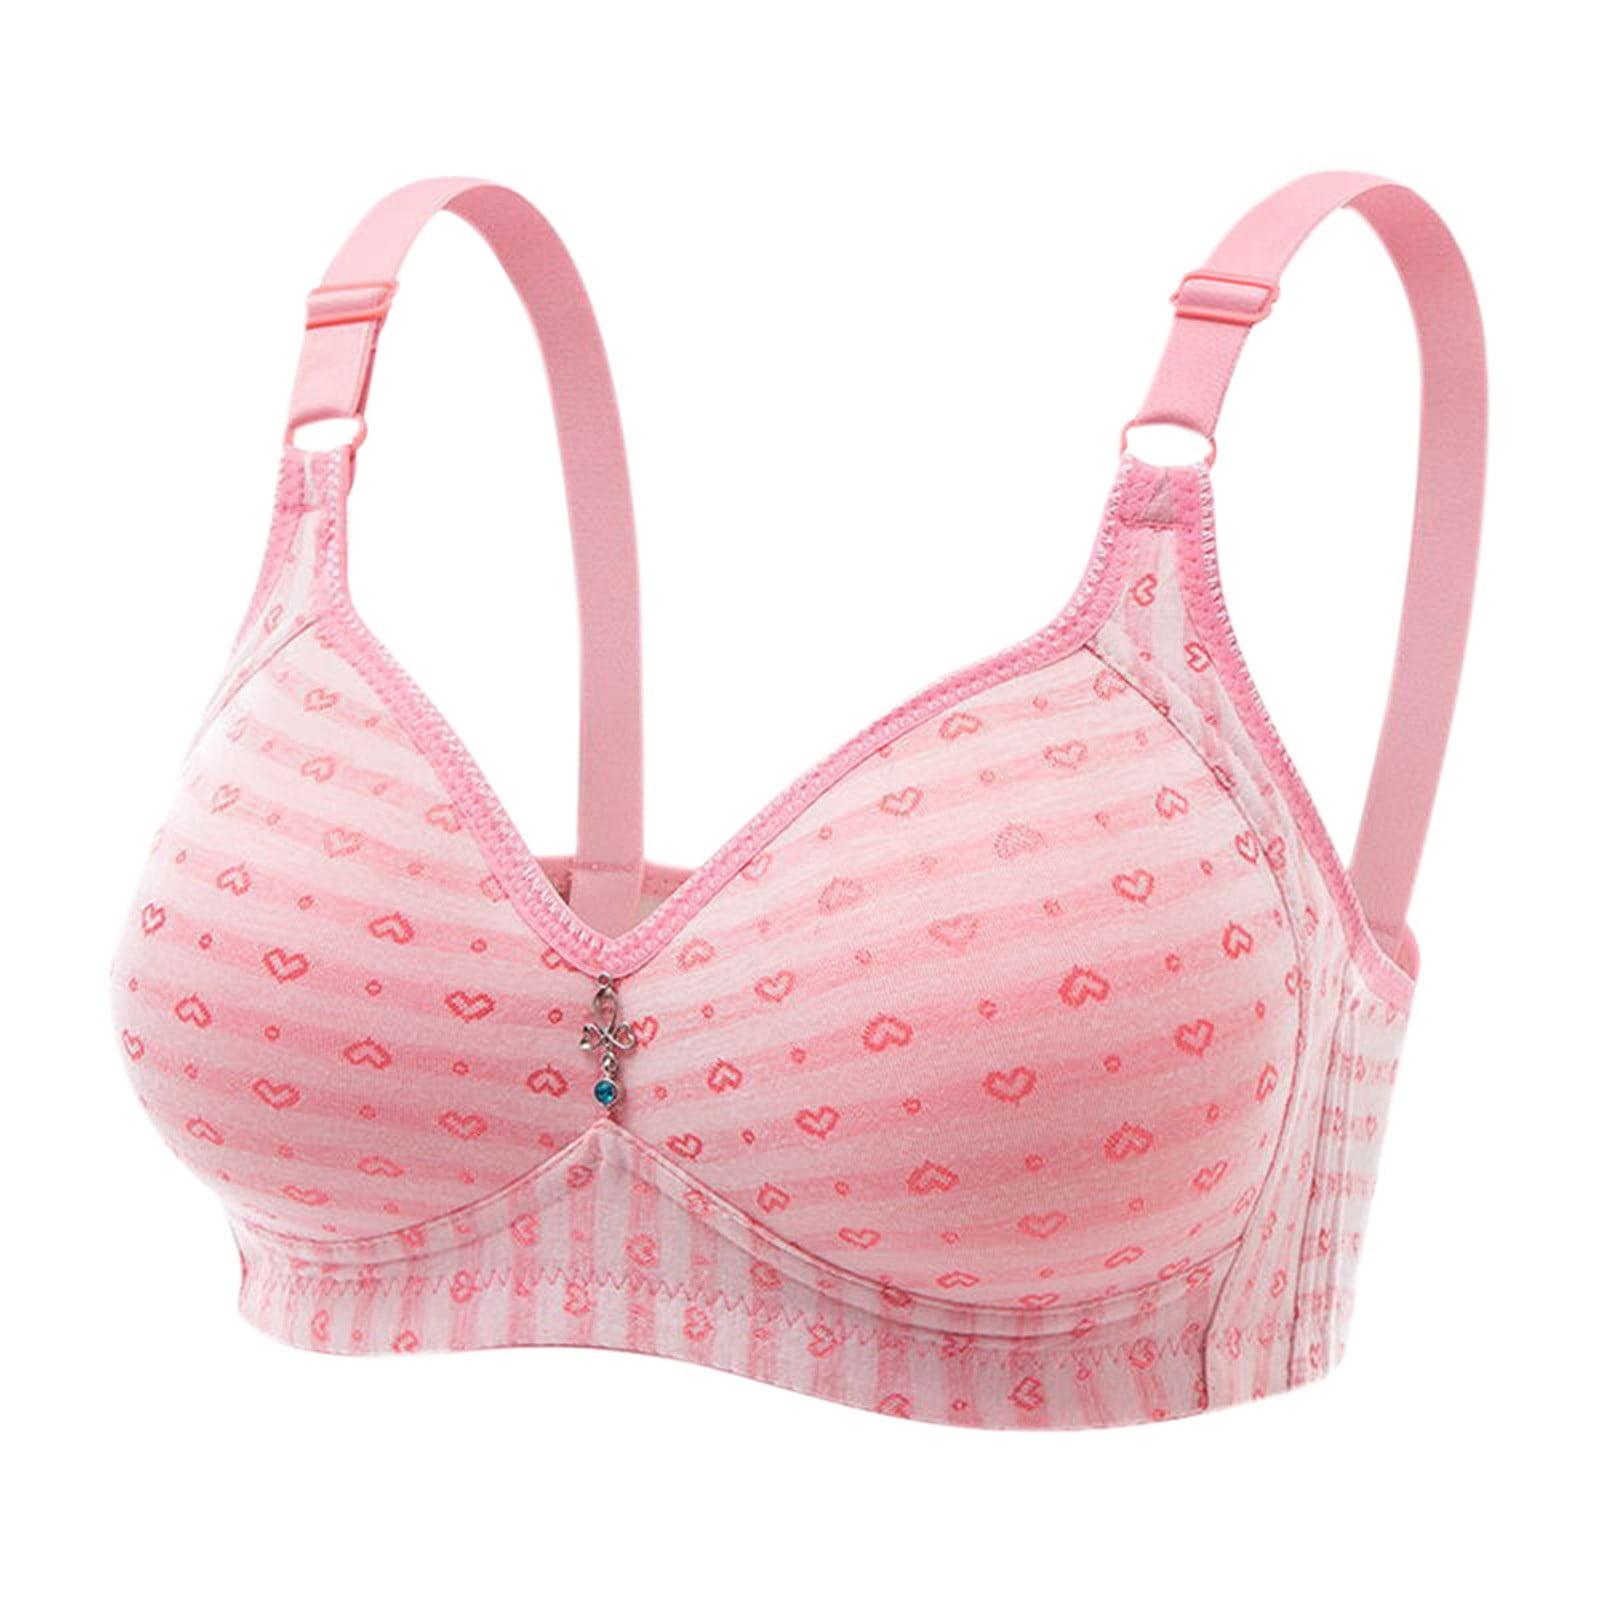 Eashery Bras for Women Solid Underwear Bra Womens Bra with Support Pink M 